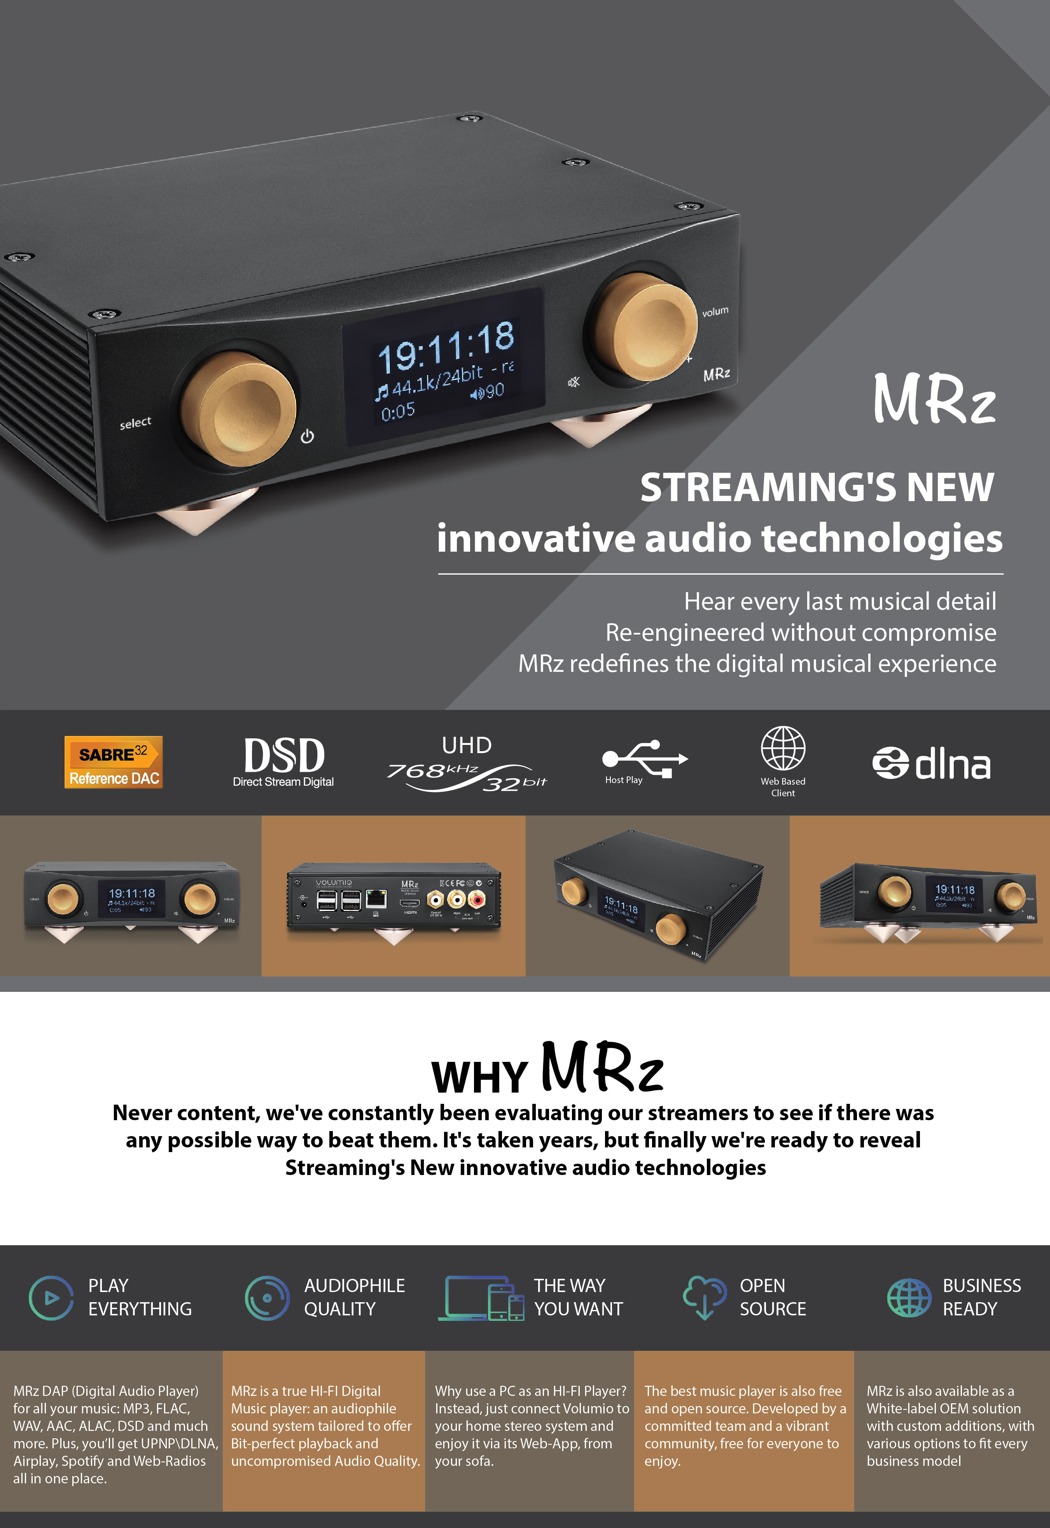 mrz_music_streaming_device_02